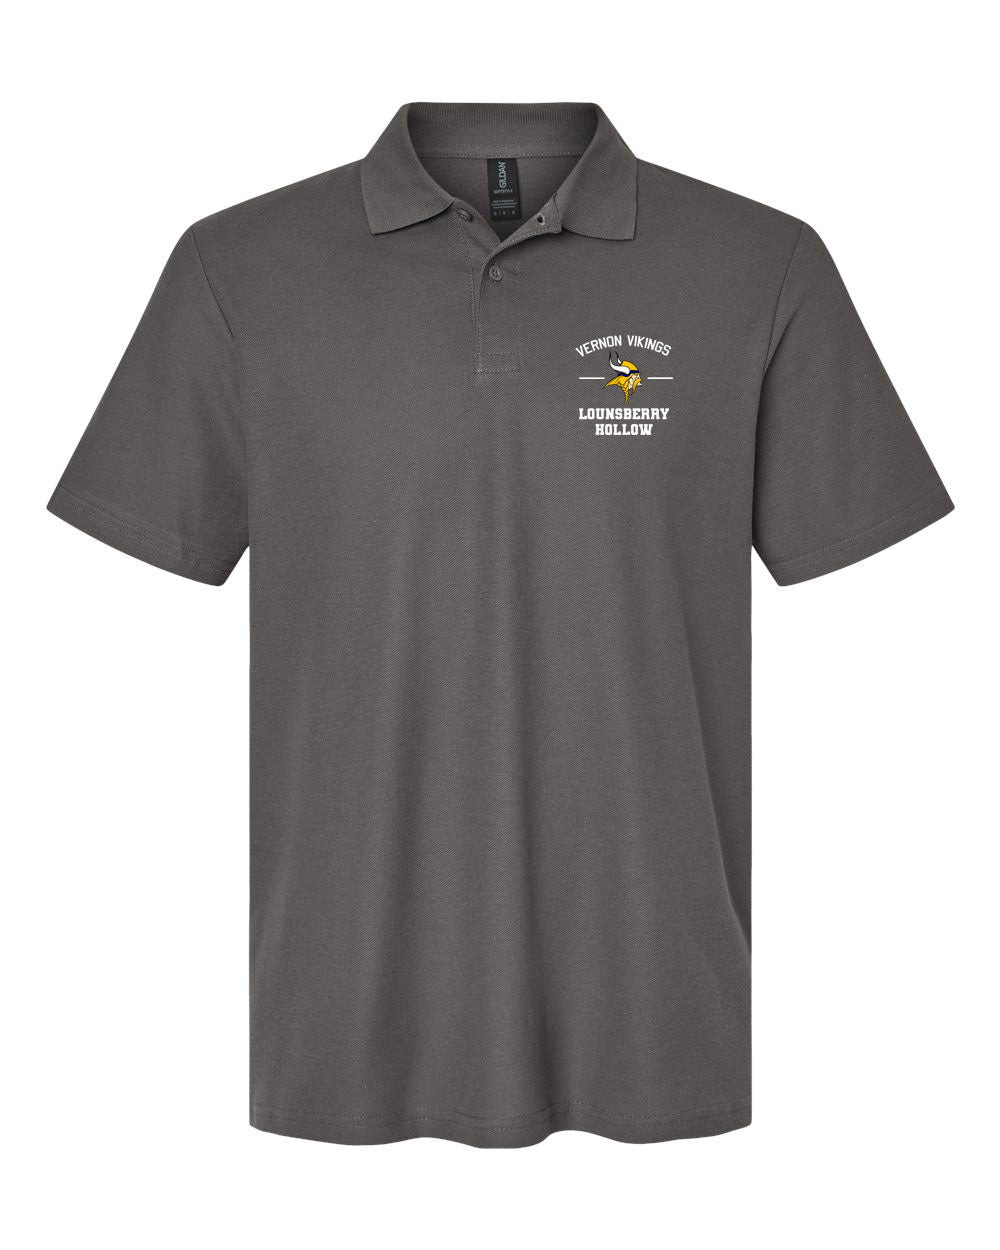 Lounsberry Hollow Design 2 Polo T-Shirt